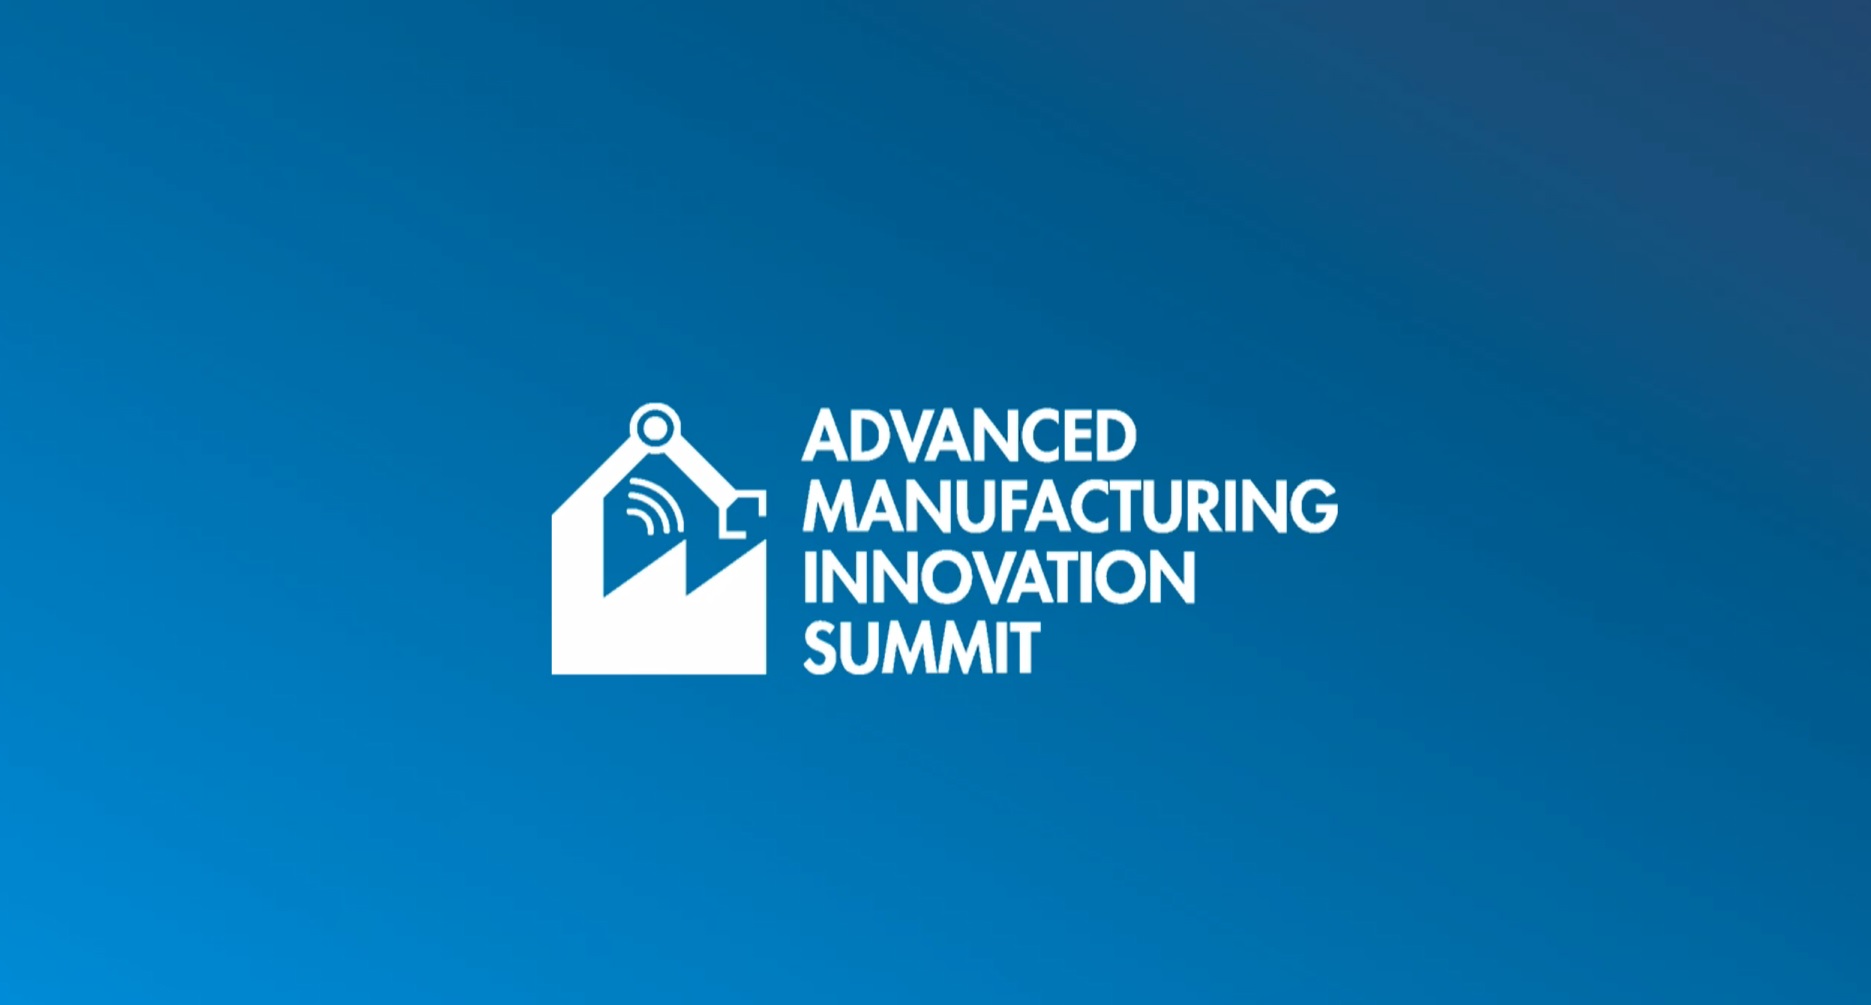 BATZ  Advanced  Manufacturing  Innovation  Summit  2019